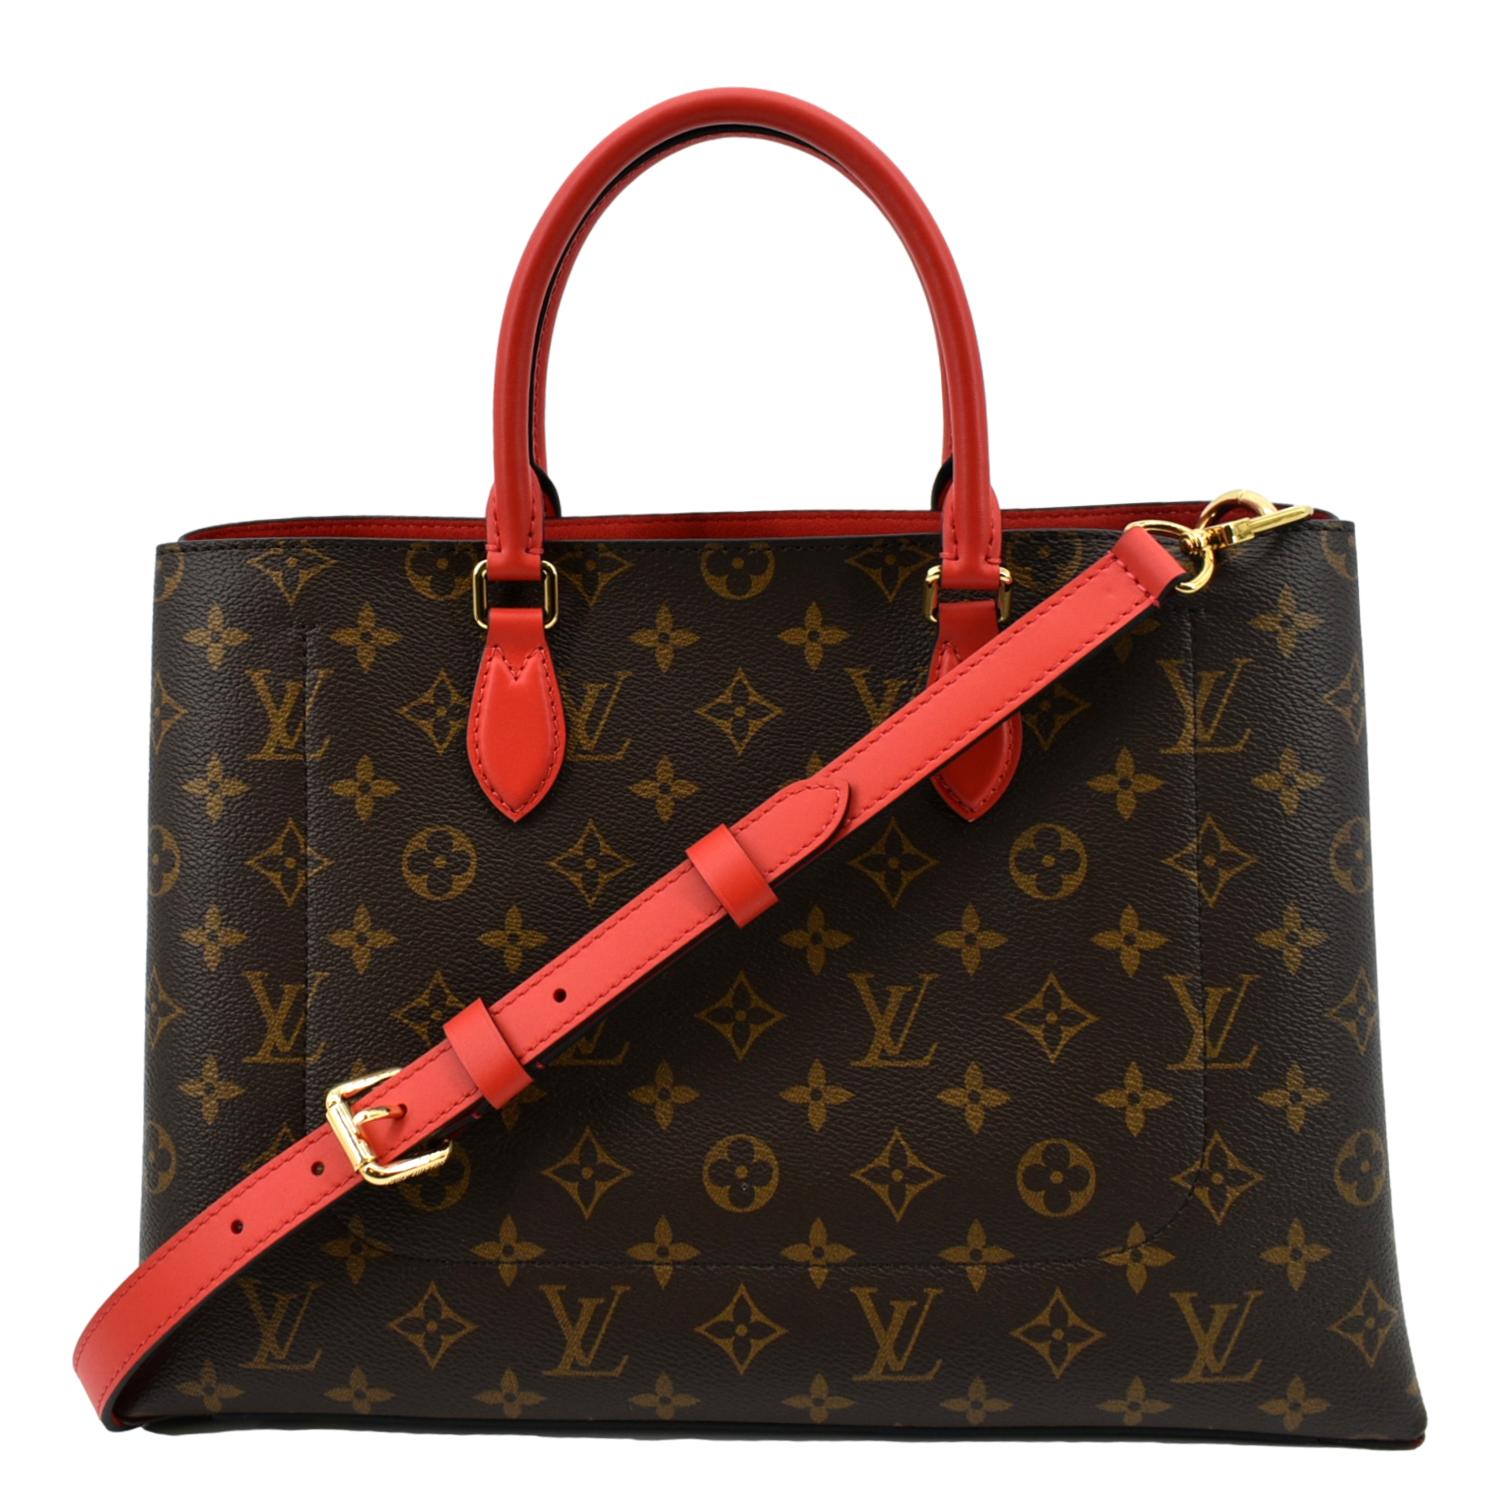 Replying to @amanda_berisford CAMERA BOX BAG AGH #swifttok #taylorswif, Louis  Vuitton Bags